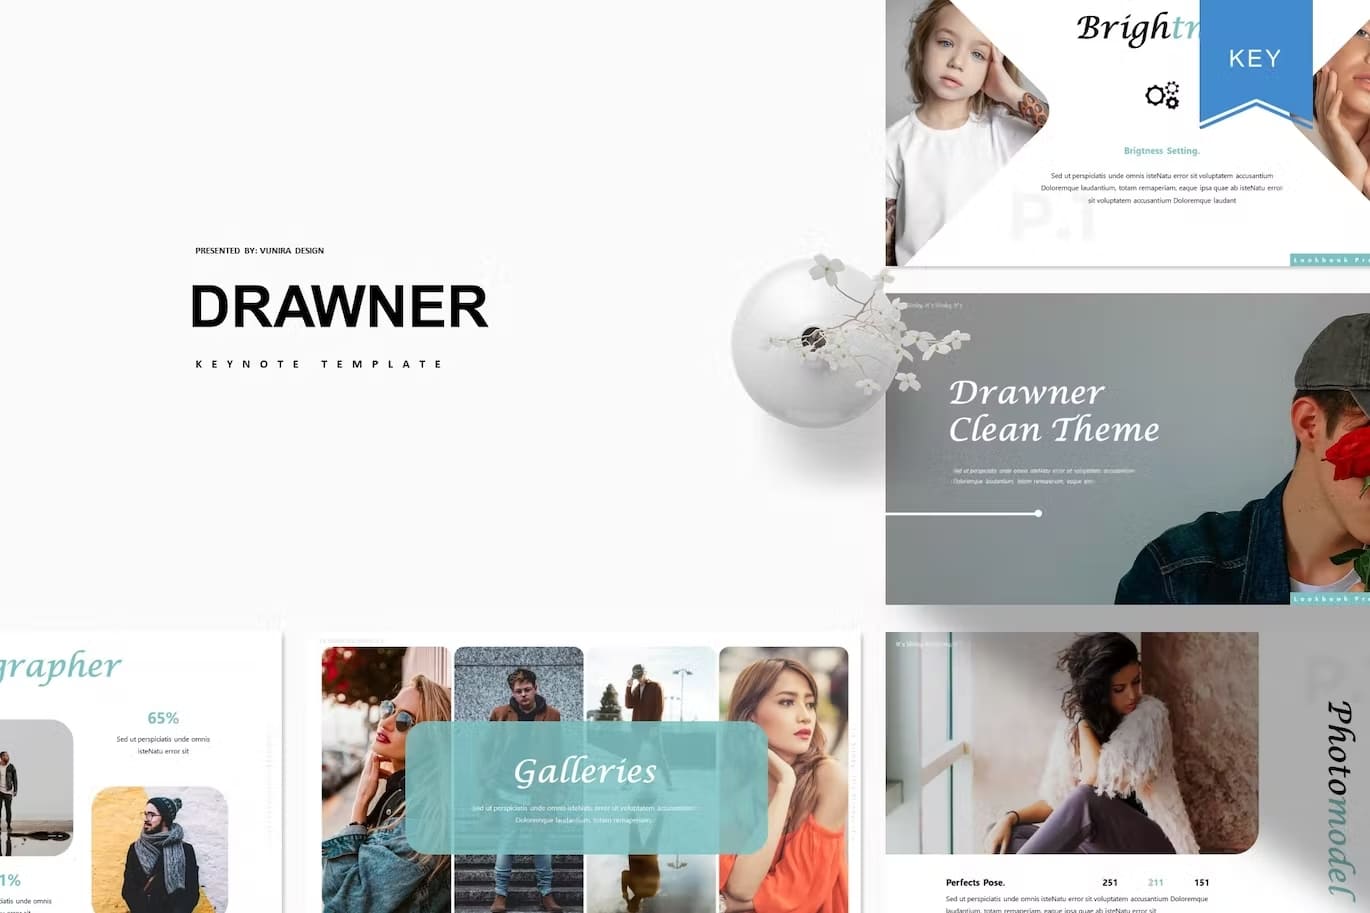 Slides of Drawner powerpoint template: Galleries, Brightr Key, Drawner Clean Theme, Photomodel.